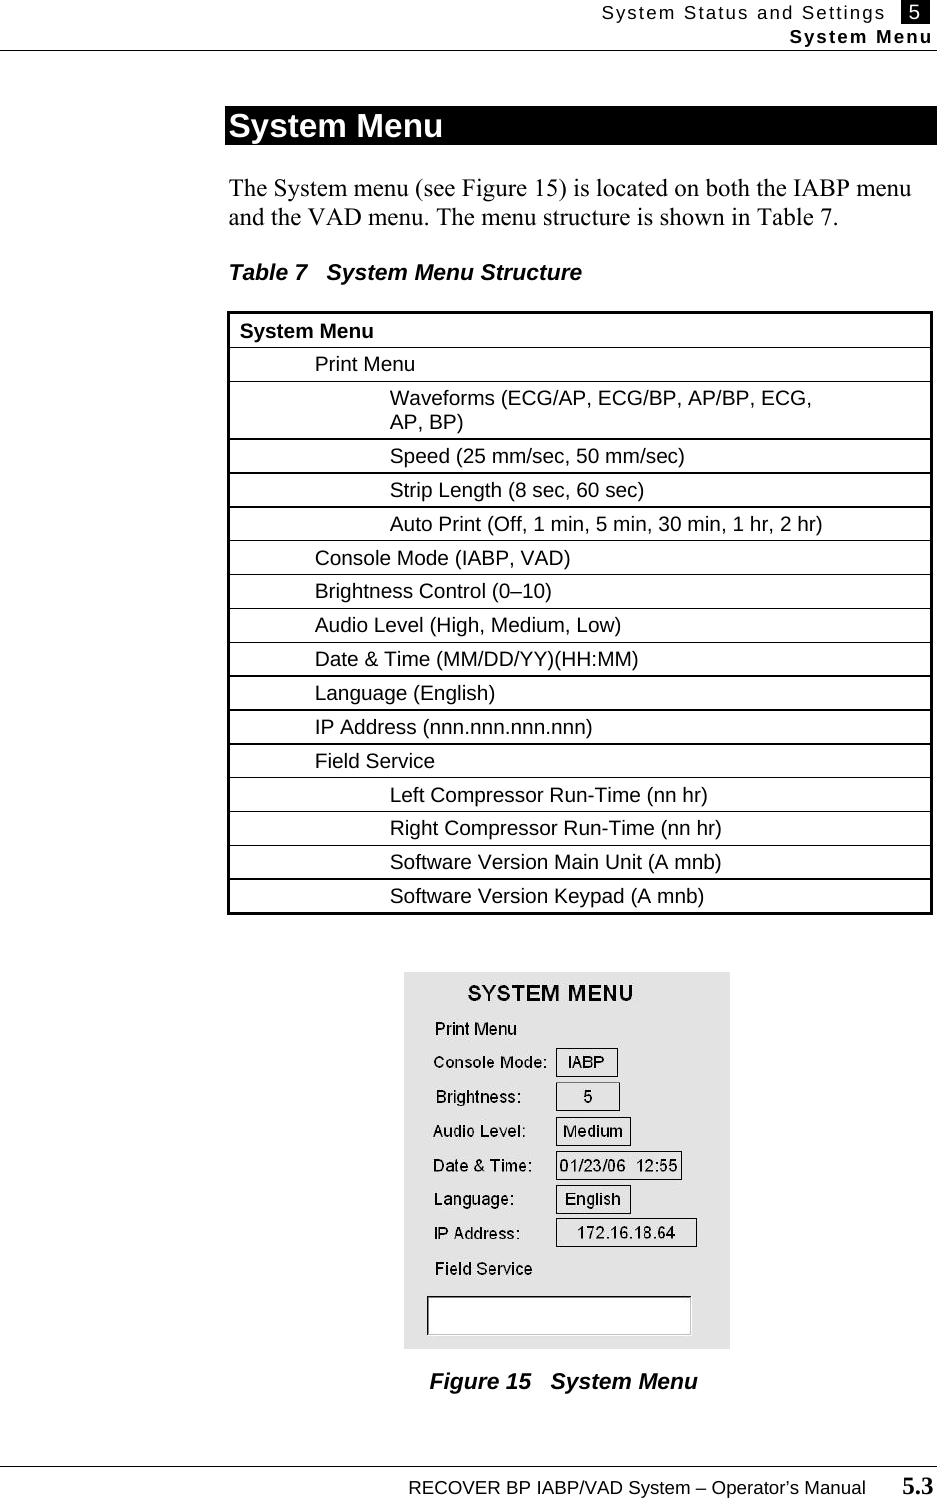 System Status and Settings   5   System Menu  RECOVER BP IABP/VAD System – Operator’s Manual       5.3  System Menu  The System menu (see Figure 15) is located on both the IABP menu and the VAD menu. The menu structure is shown in Table 7.         Table 7   System Menu Structure  System Menu  Print Menu     Waveforms (ECG/AP, ECG/BP, AP/BP, ECG,      AP, BP)     Speed (25 mm/sec, 50 mm/sec)     Strip Length (8 sec, 60 sec)     Auto Print (Off, 1 min, 5 min, 30 min, 1 hr, 2 hr)   Console Mode (IABP, VAD)   Brightness Control (0–10)   Audio Level (High, Medium, Low)   Date &amp; Time (MM/DD/YY)(HH:MM)  Language (English)   IP Address (nnn.nnn.nnn.nnn)  Field Service     Left Compressor Run-Time (nn hr)     Right Compressor Run-Time (nn hr)     Software Version Main Unit (A mnb)     Software Version Keypad (A mnb)                       Figure 15   System Menu 